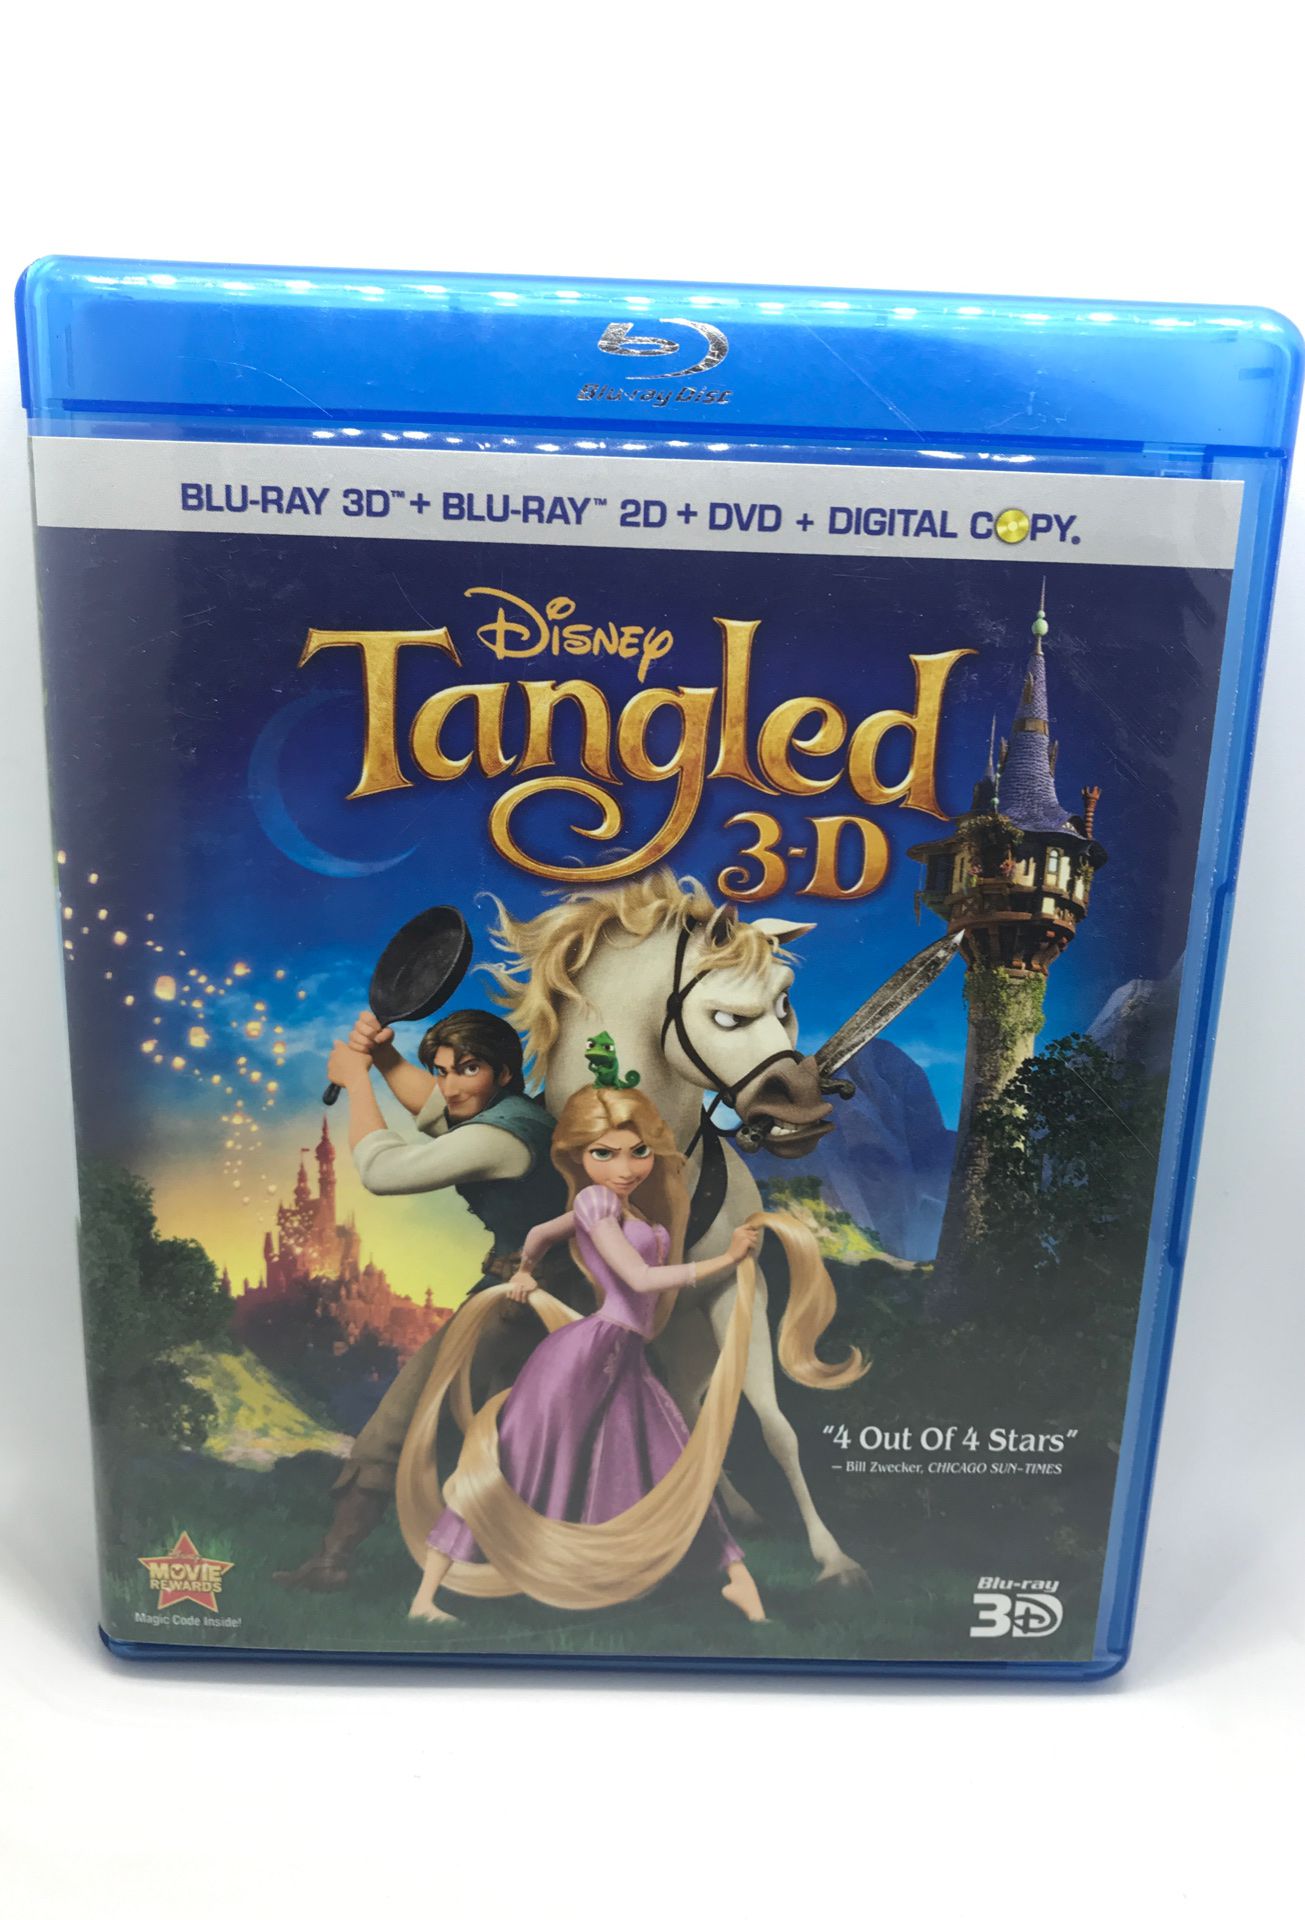 Disney’s Tangled 3D Blu-ray DVD